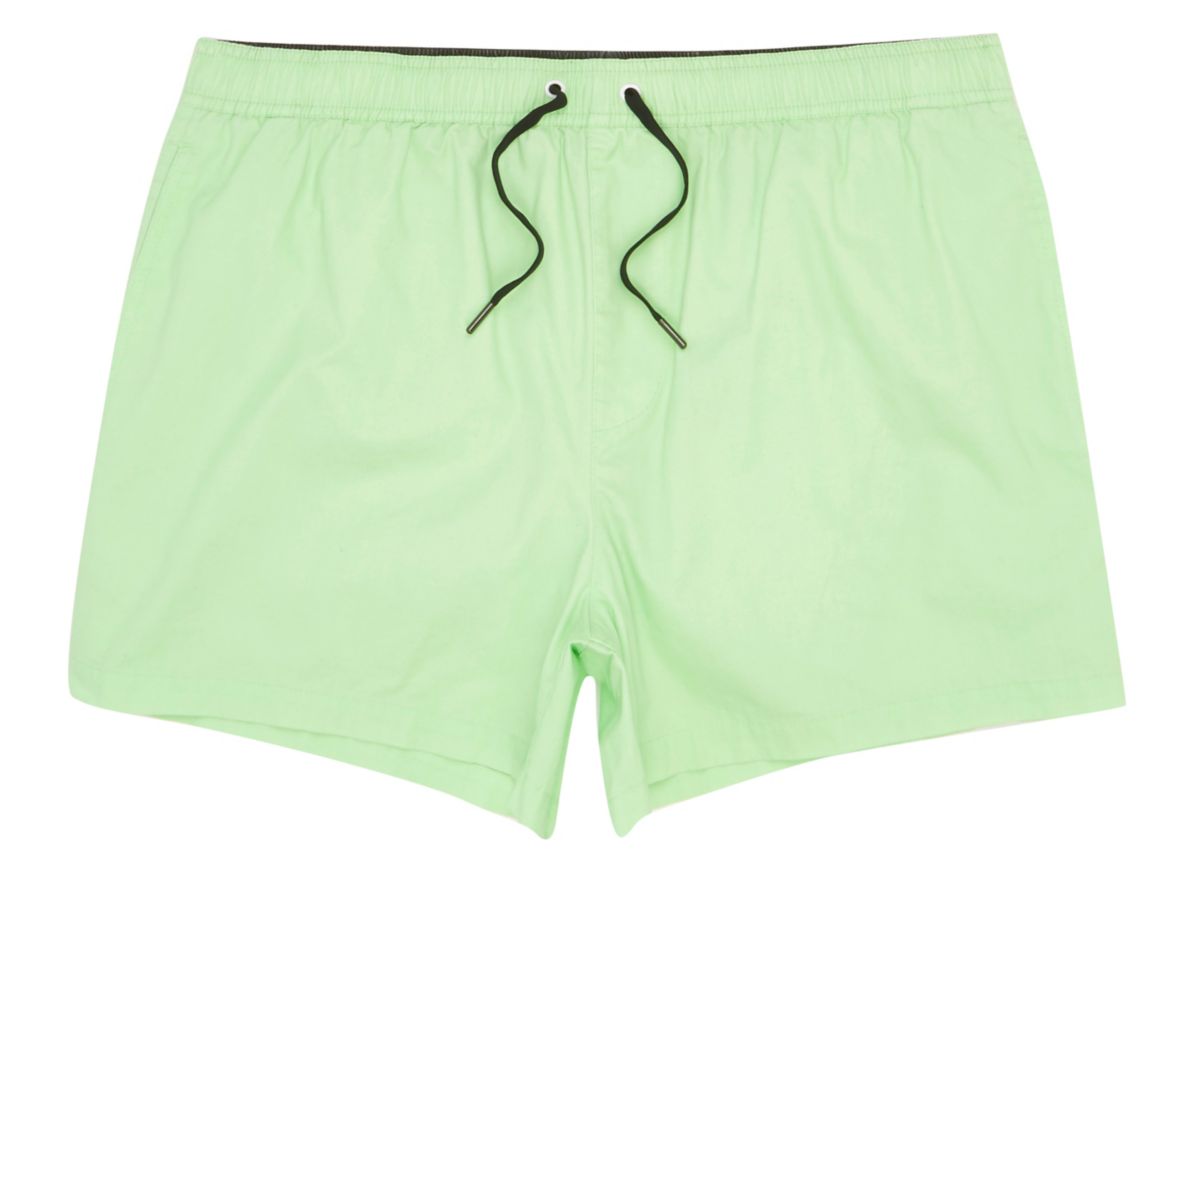 Green acid wash short swim shorts - Shorts - Sale - men